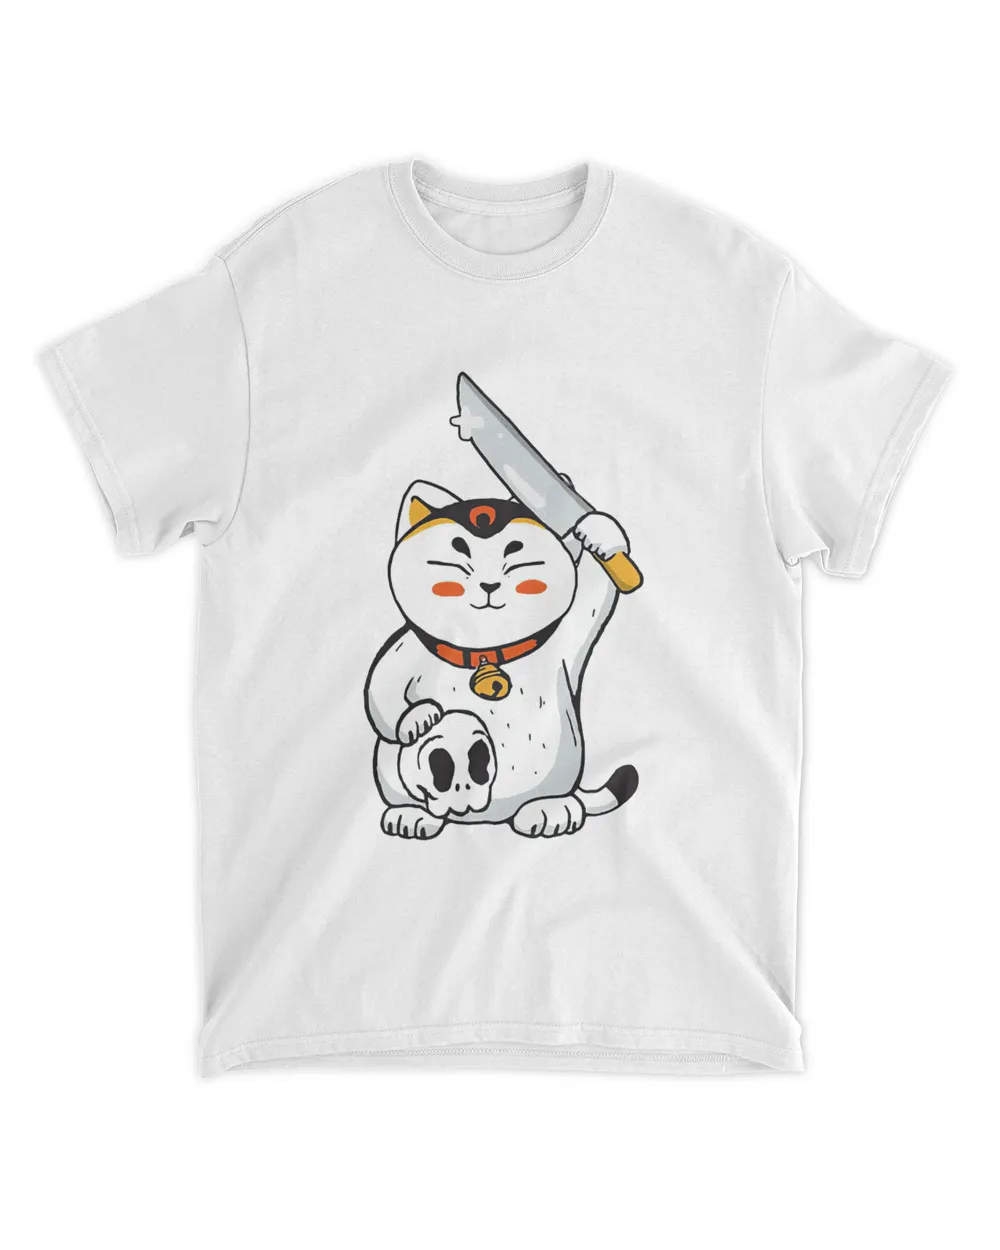 Maneki-neko Cat With Knife Shirt